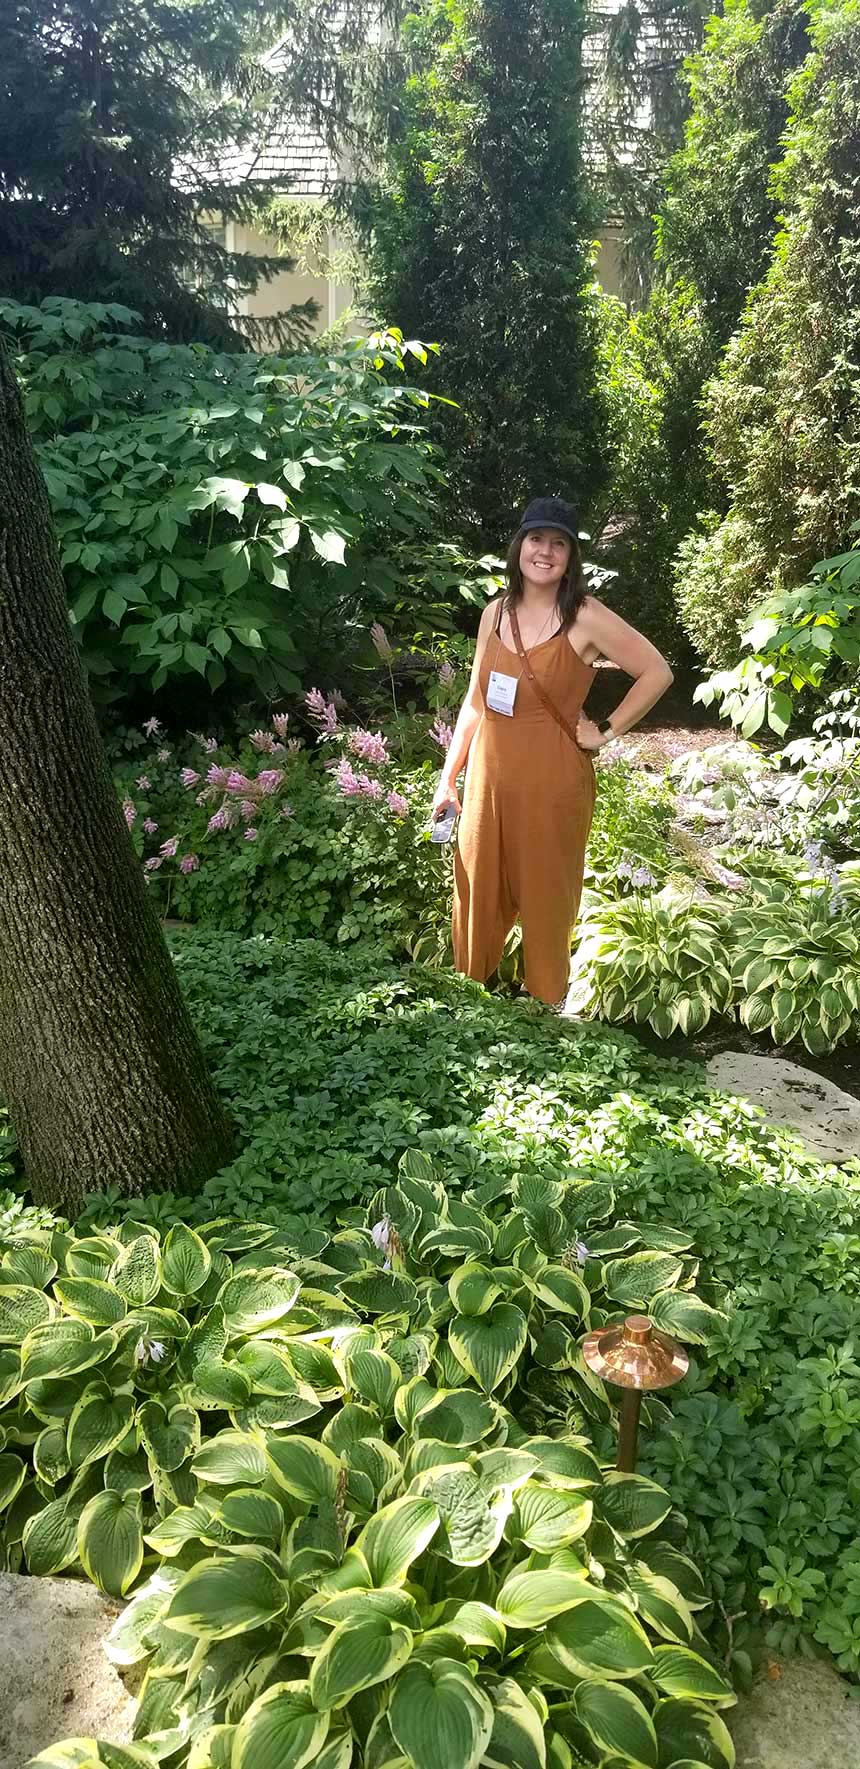 Woman standing in a garden